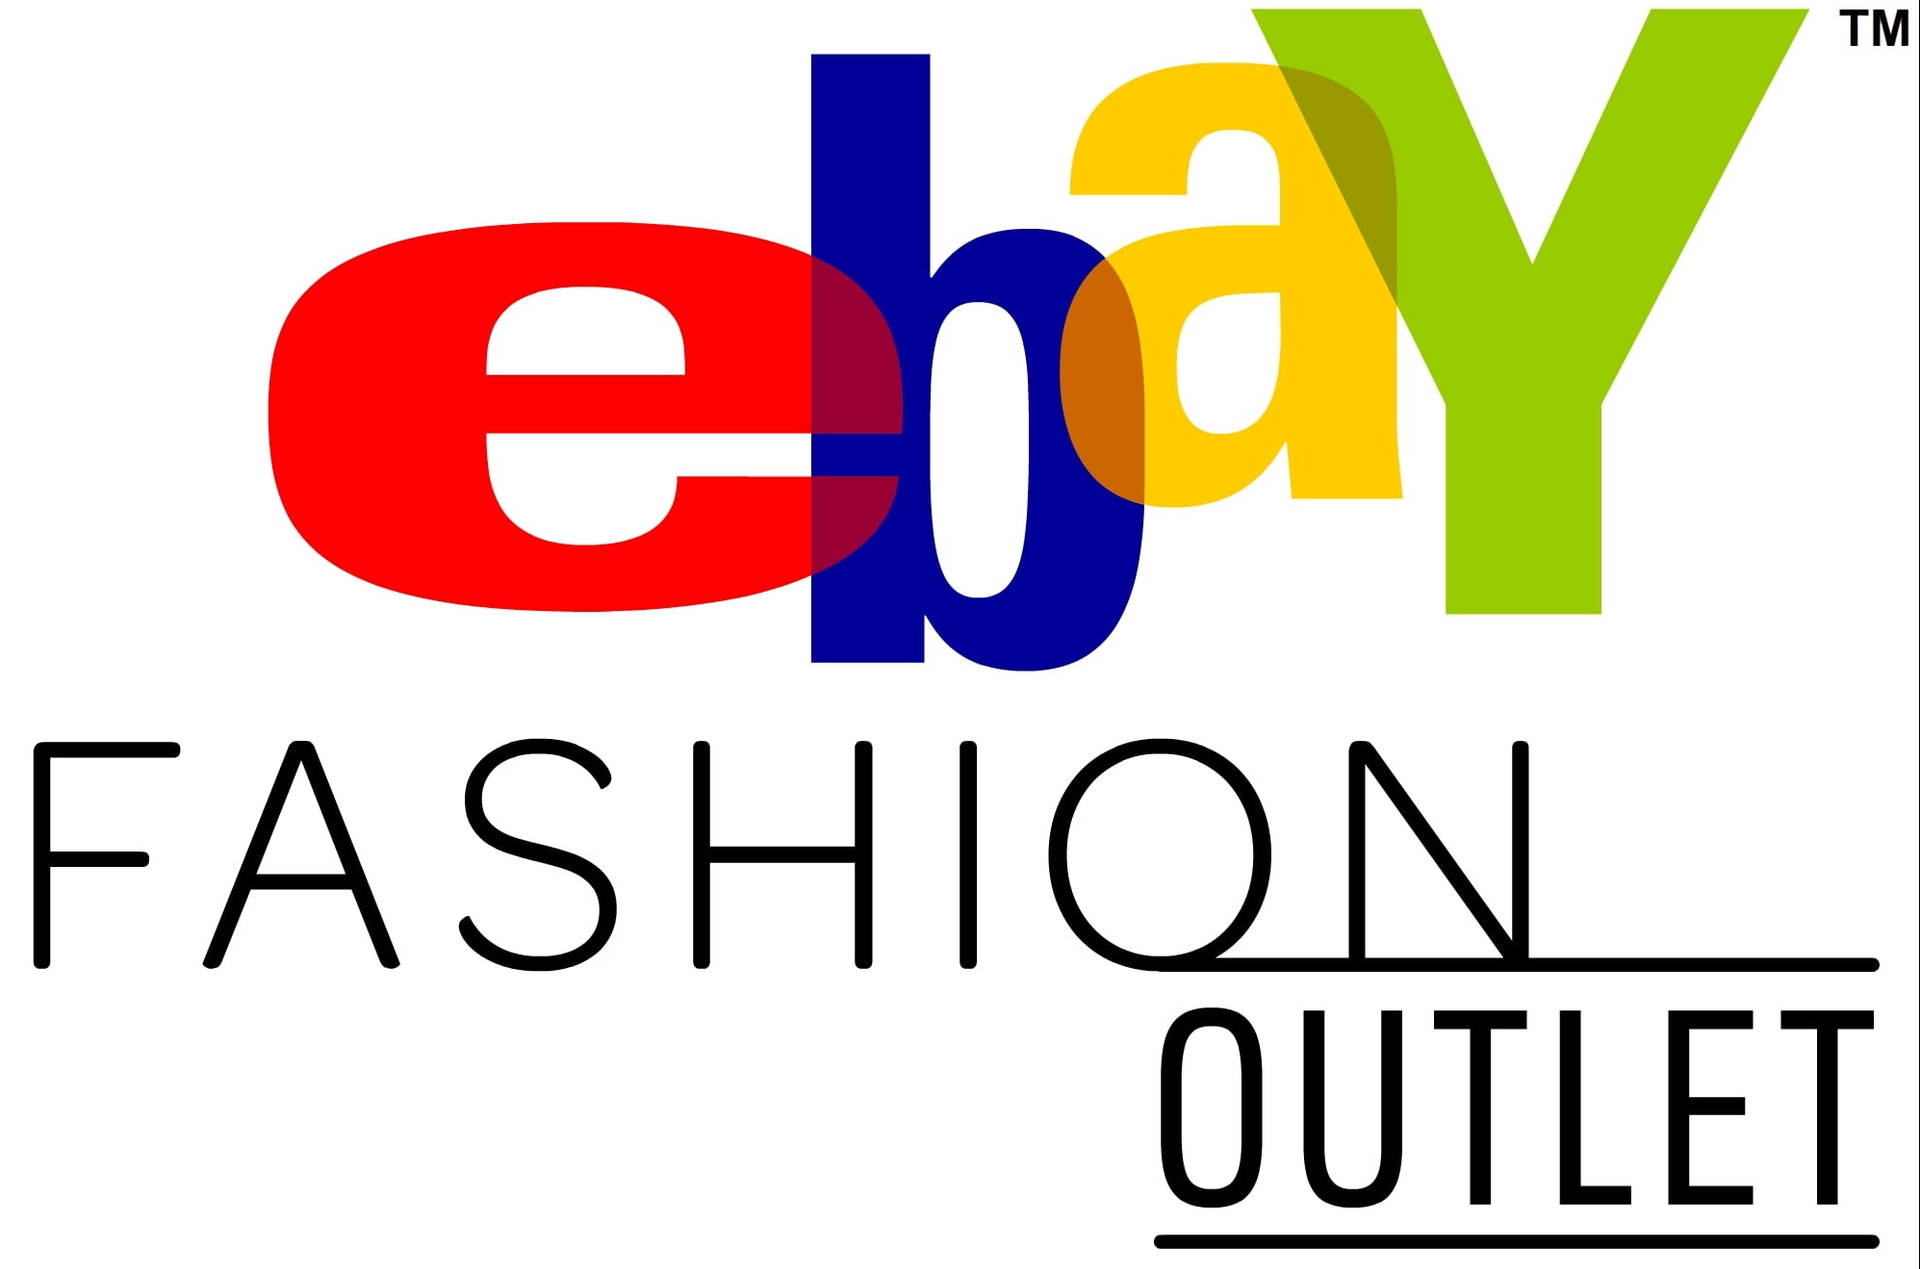 Ebay Fashion Outlet Background